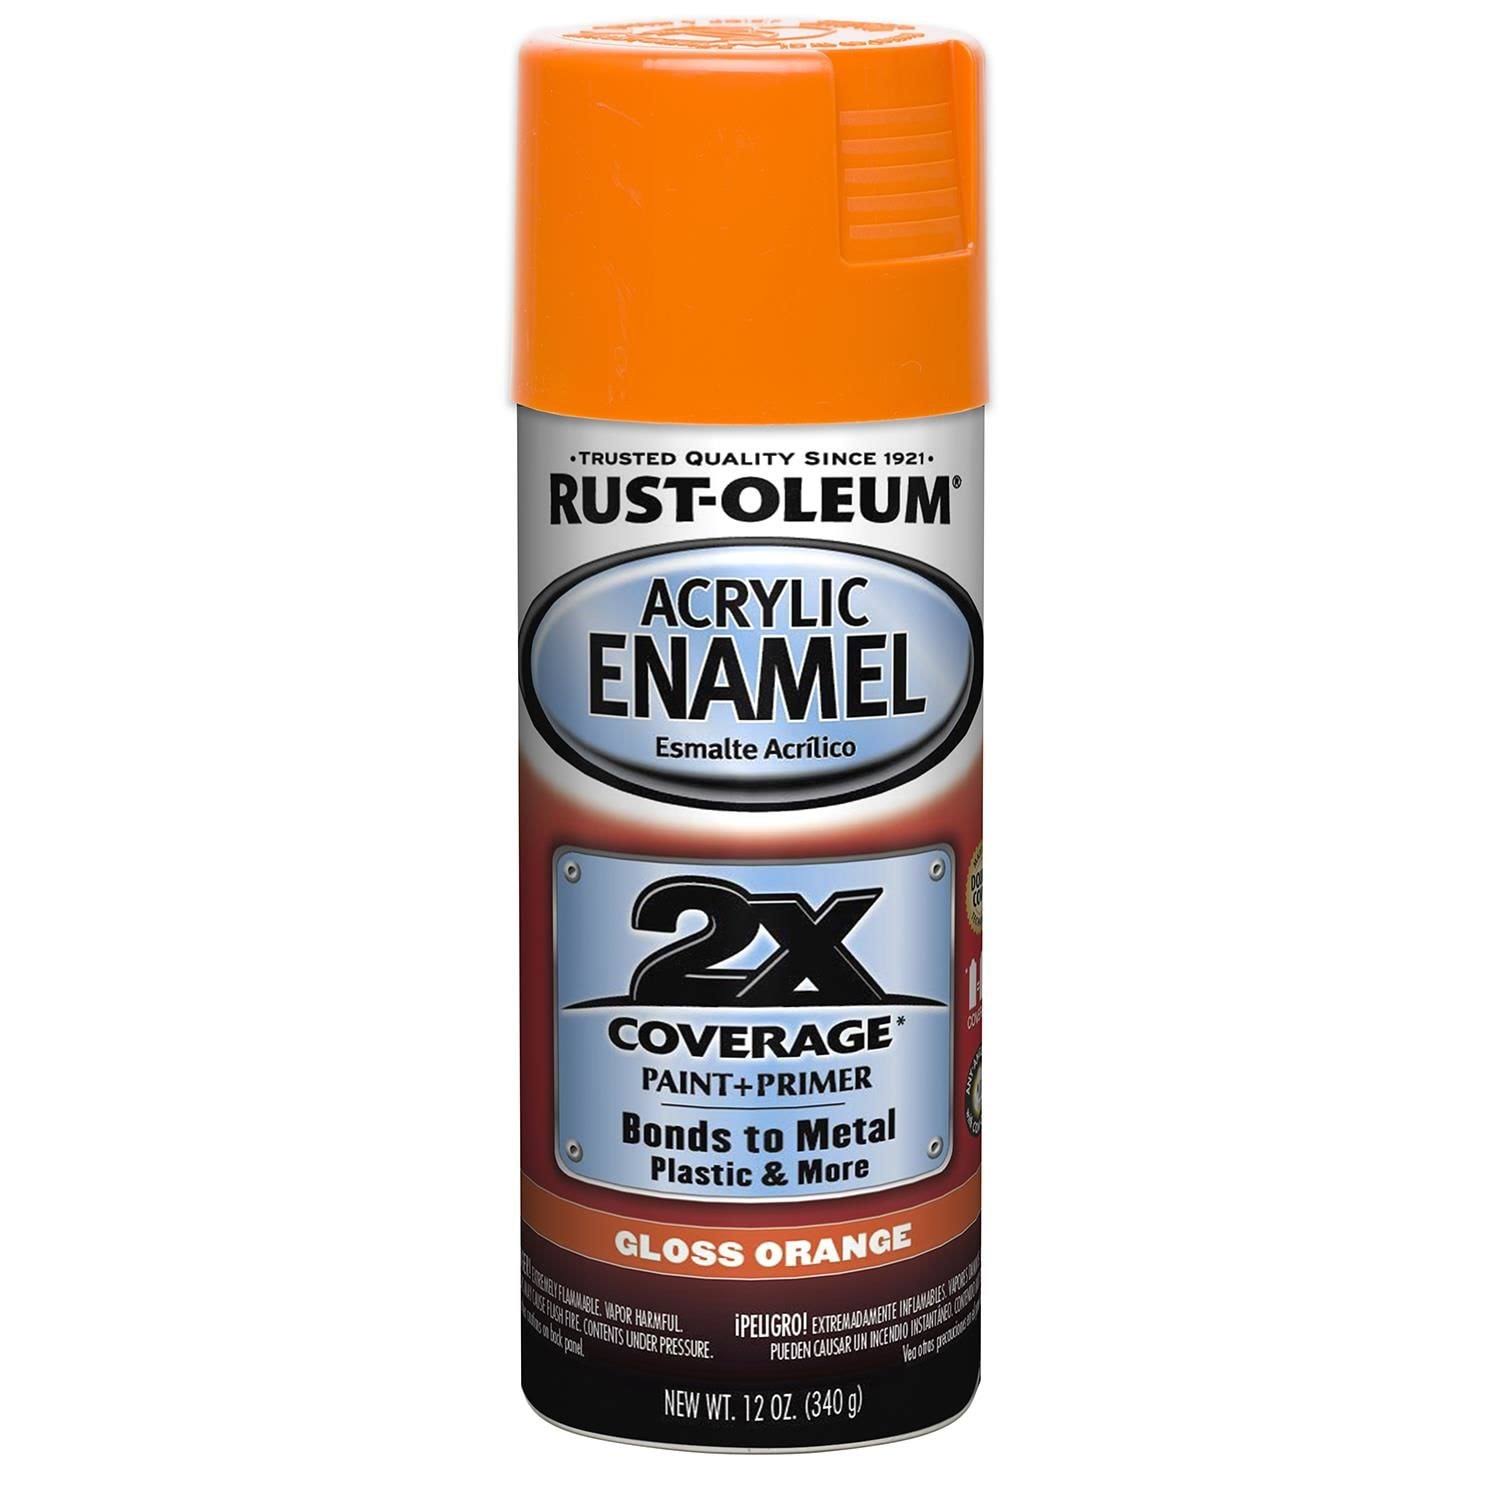 Rust-Oleum Gloss Orange Acrylic Enamel Spray Paint